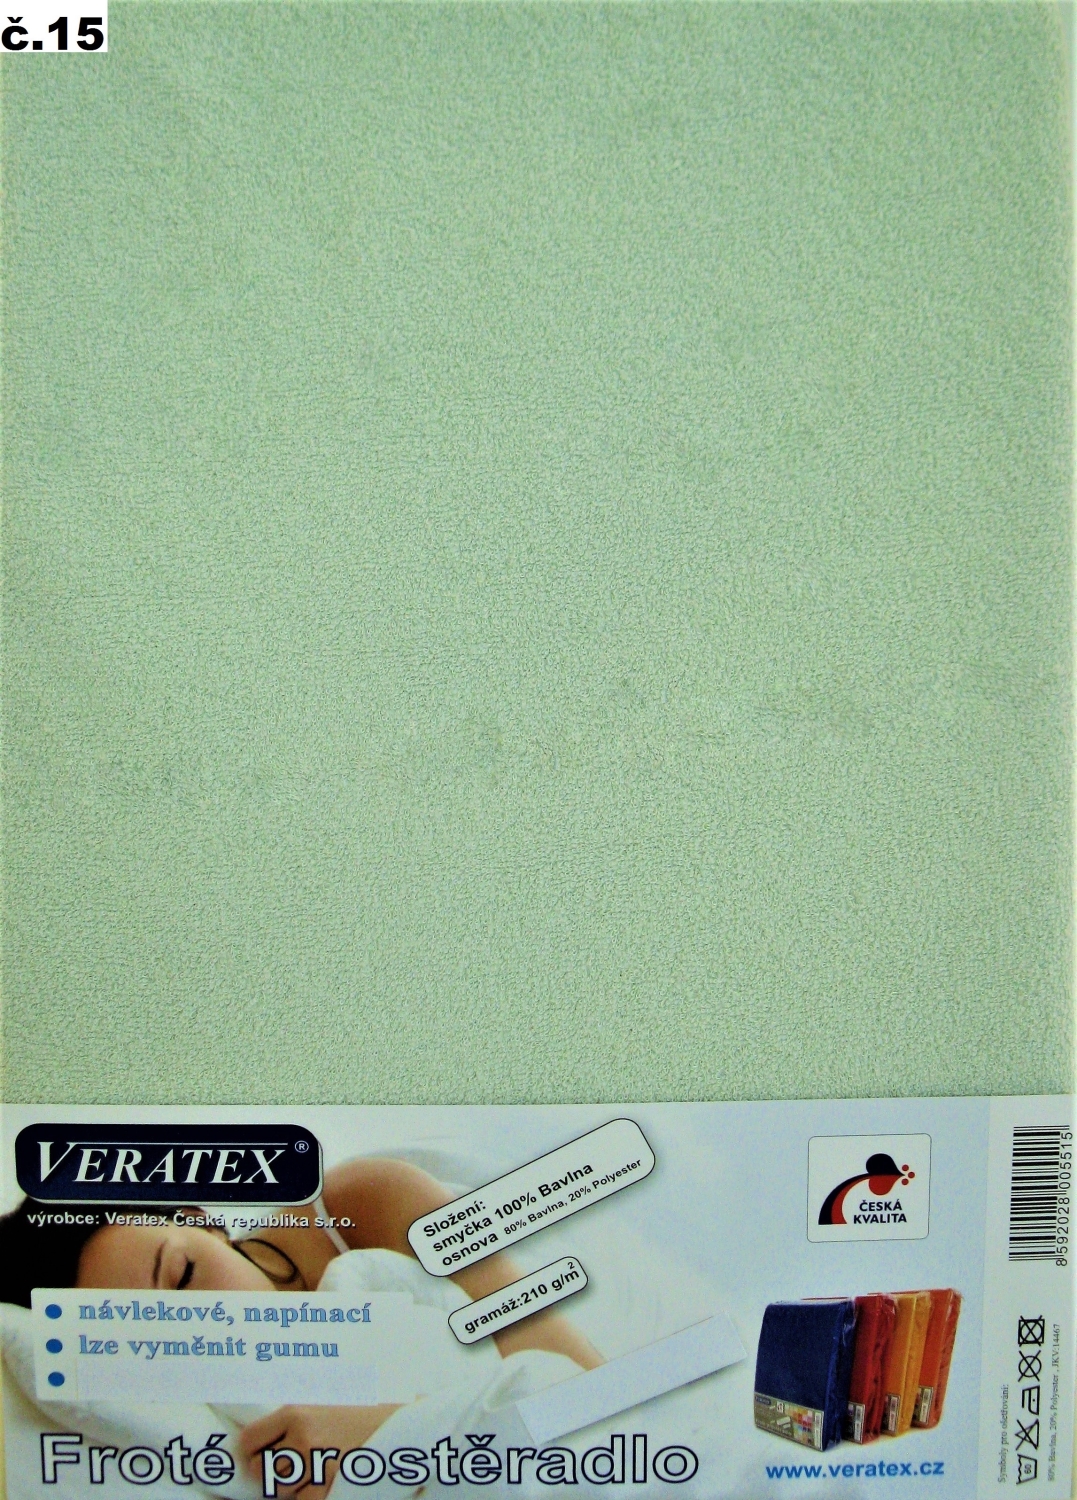 Veratex Froté prostěradlo 120x200/16 cm (č.15 sv.zelená) 120 x 200 cm